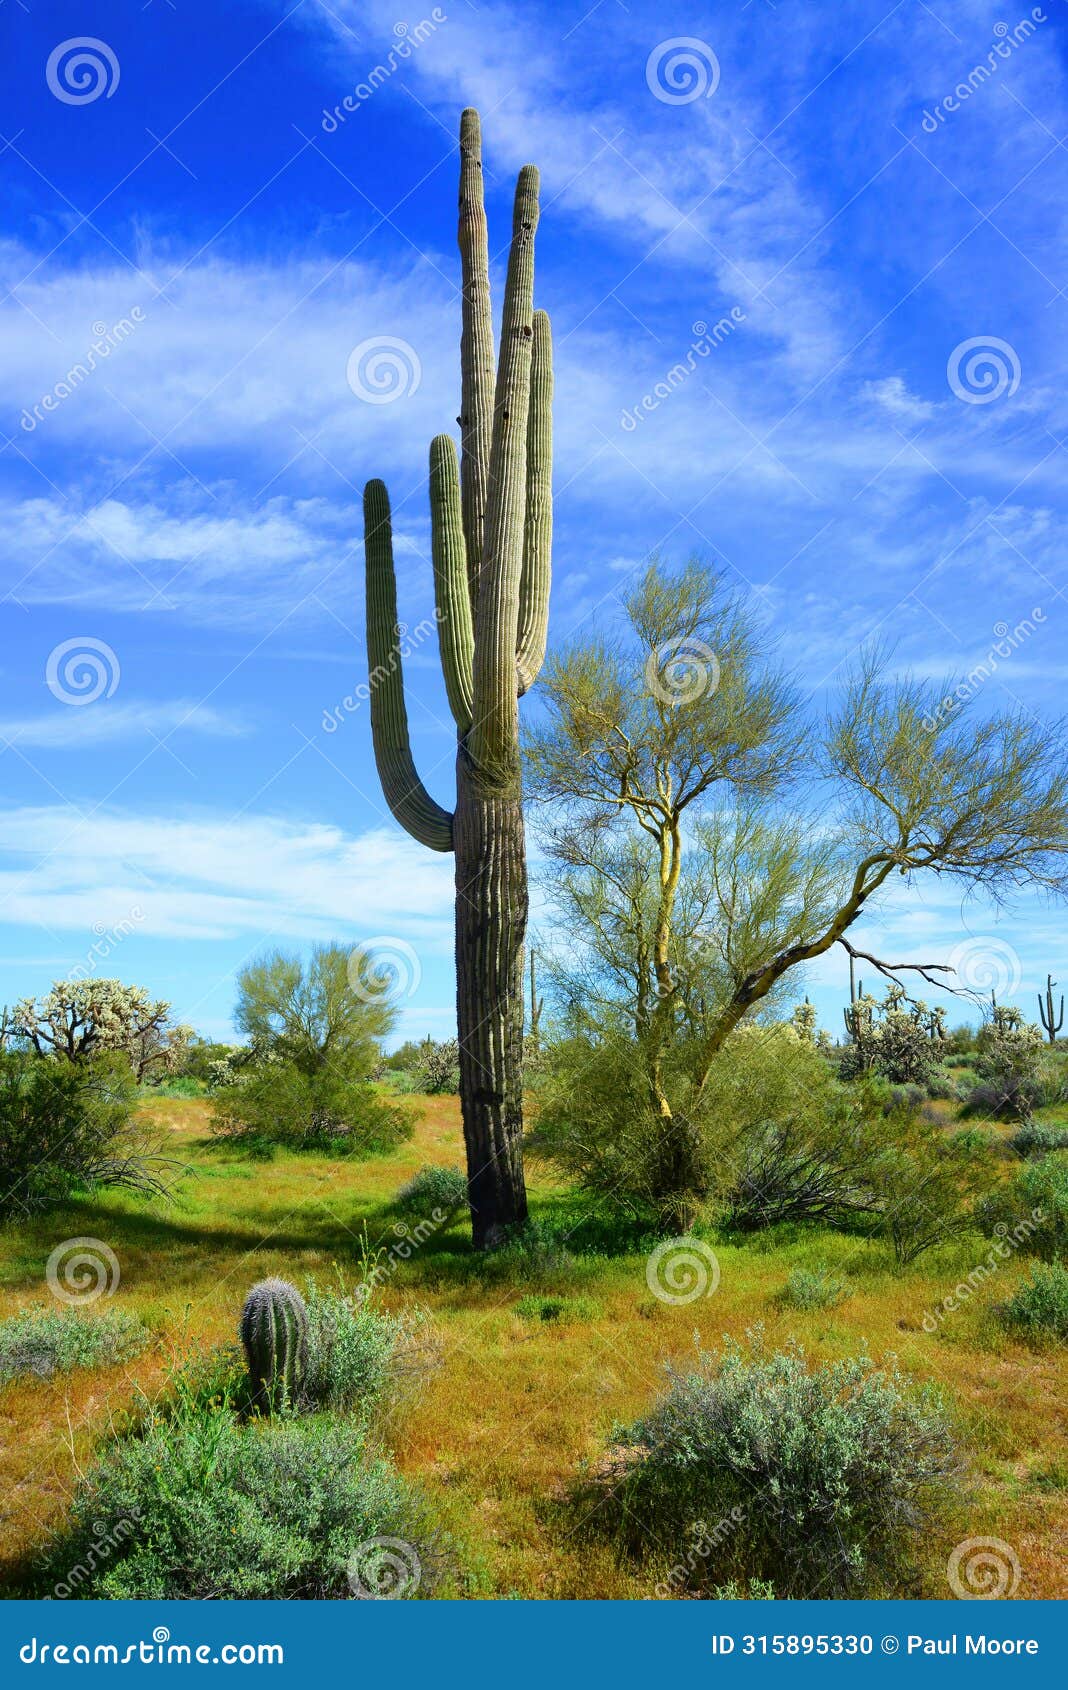 old saguaro cactus sonora desert arizona